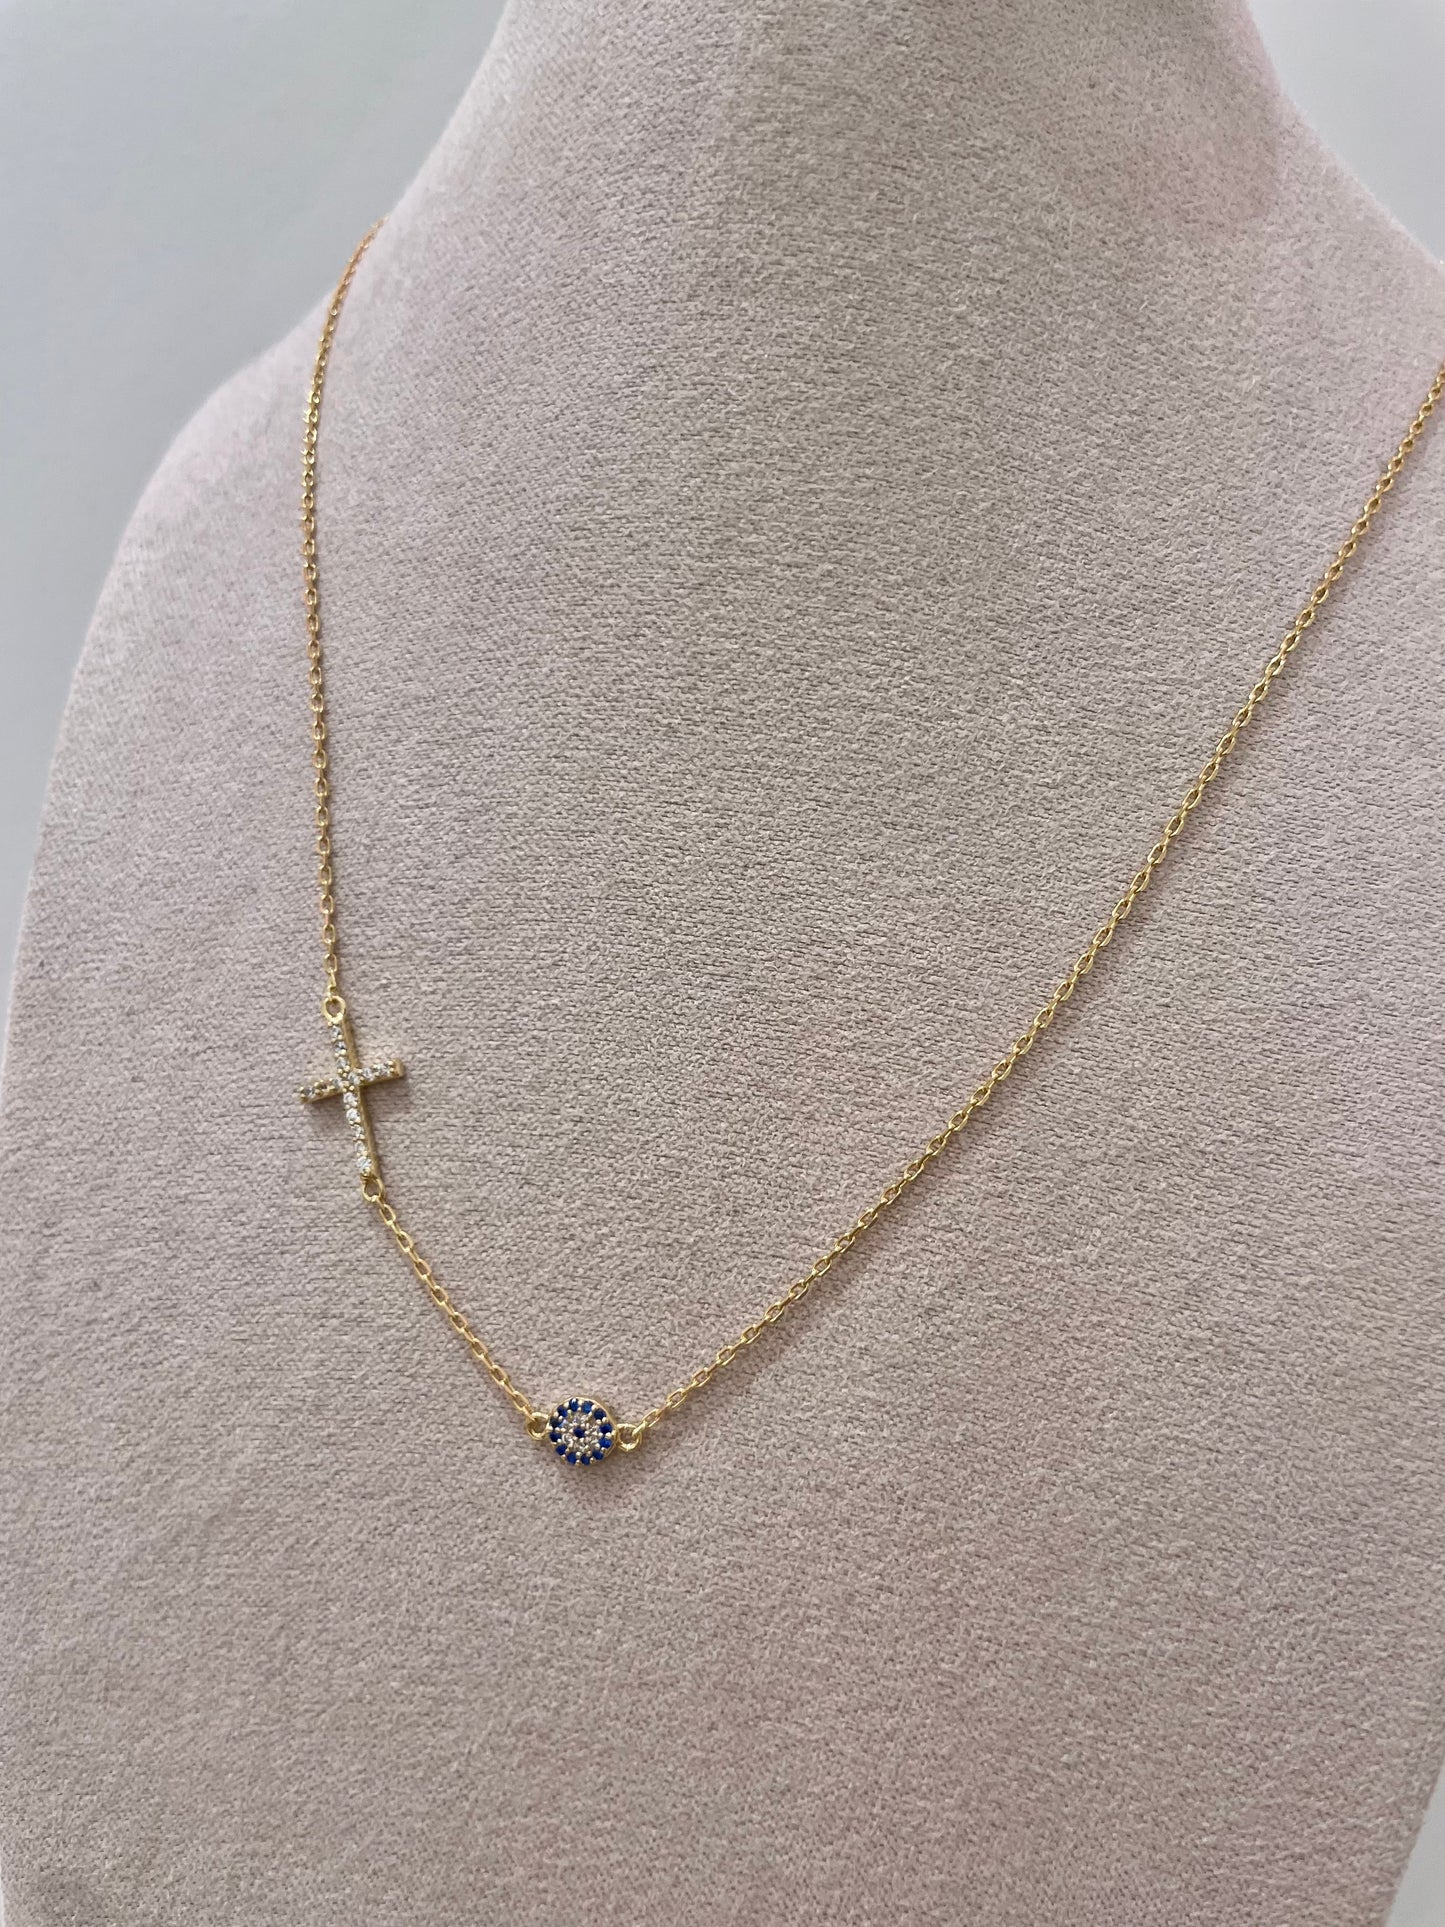 Eye & Cross Necklace - Gold